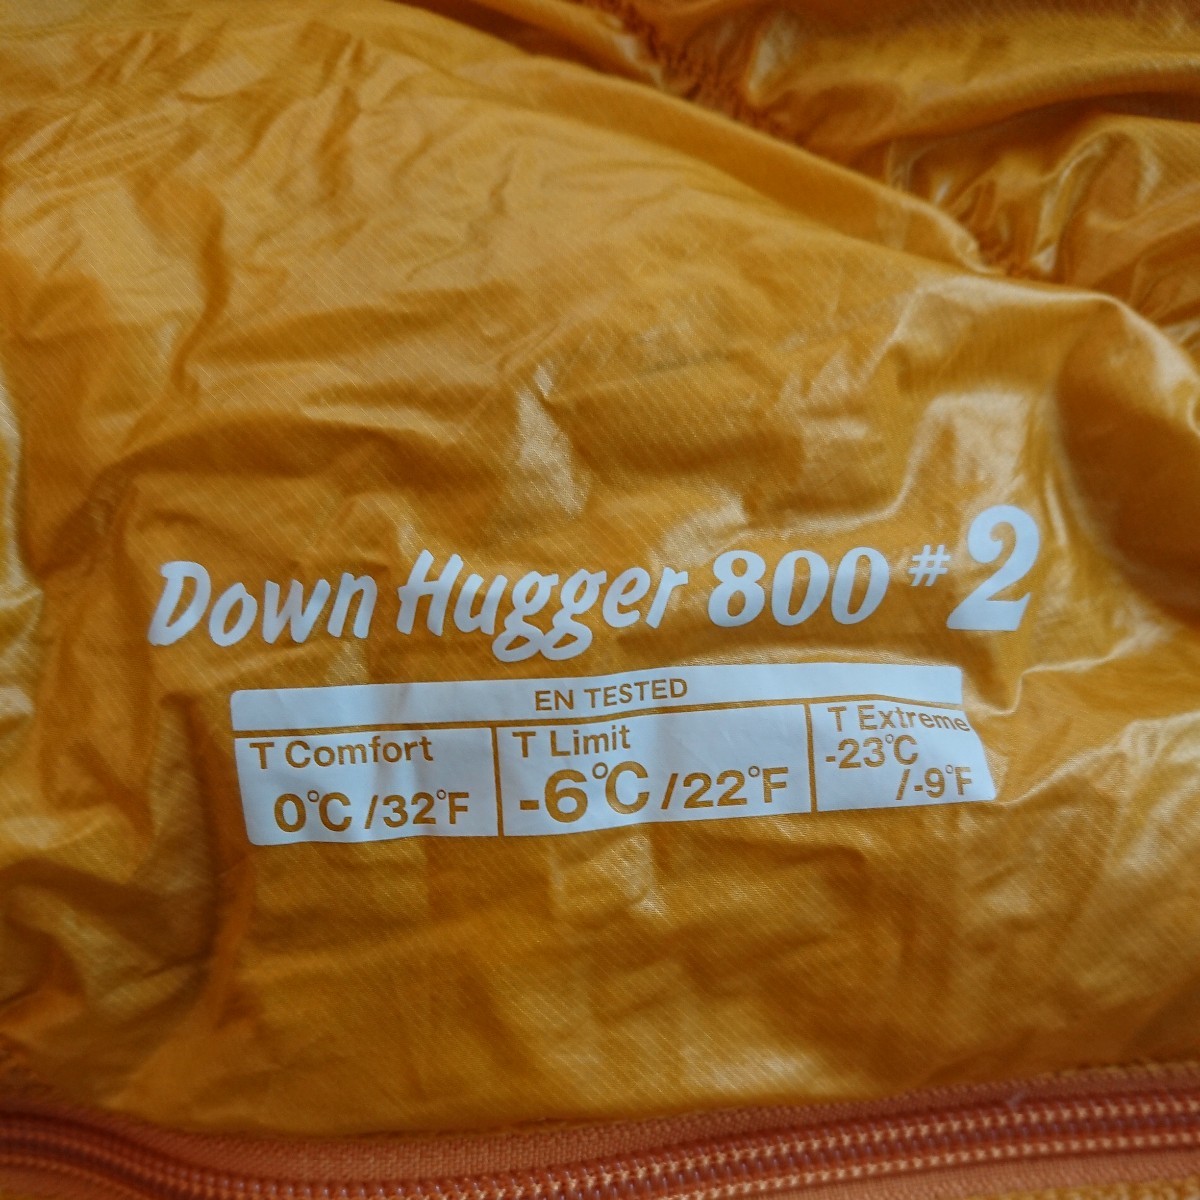  Mont Bell спальный мешок down Hugger 800 # 1121290 спальный мешок 